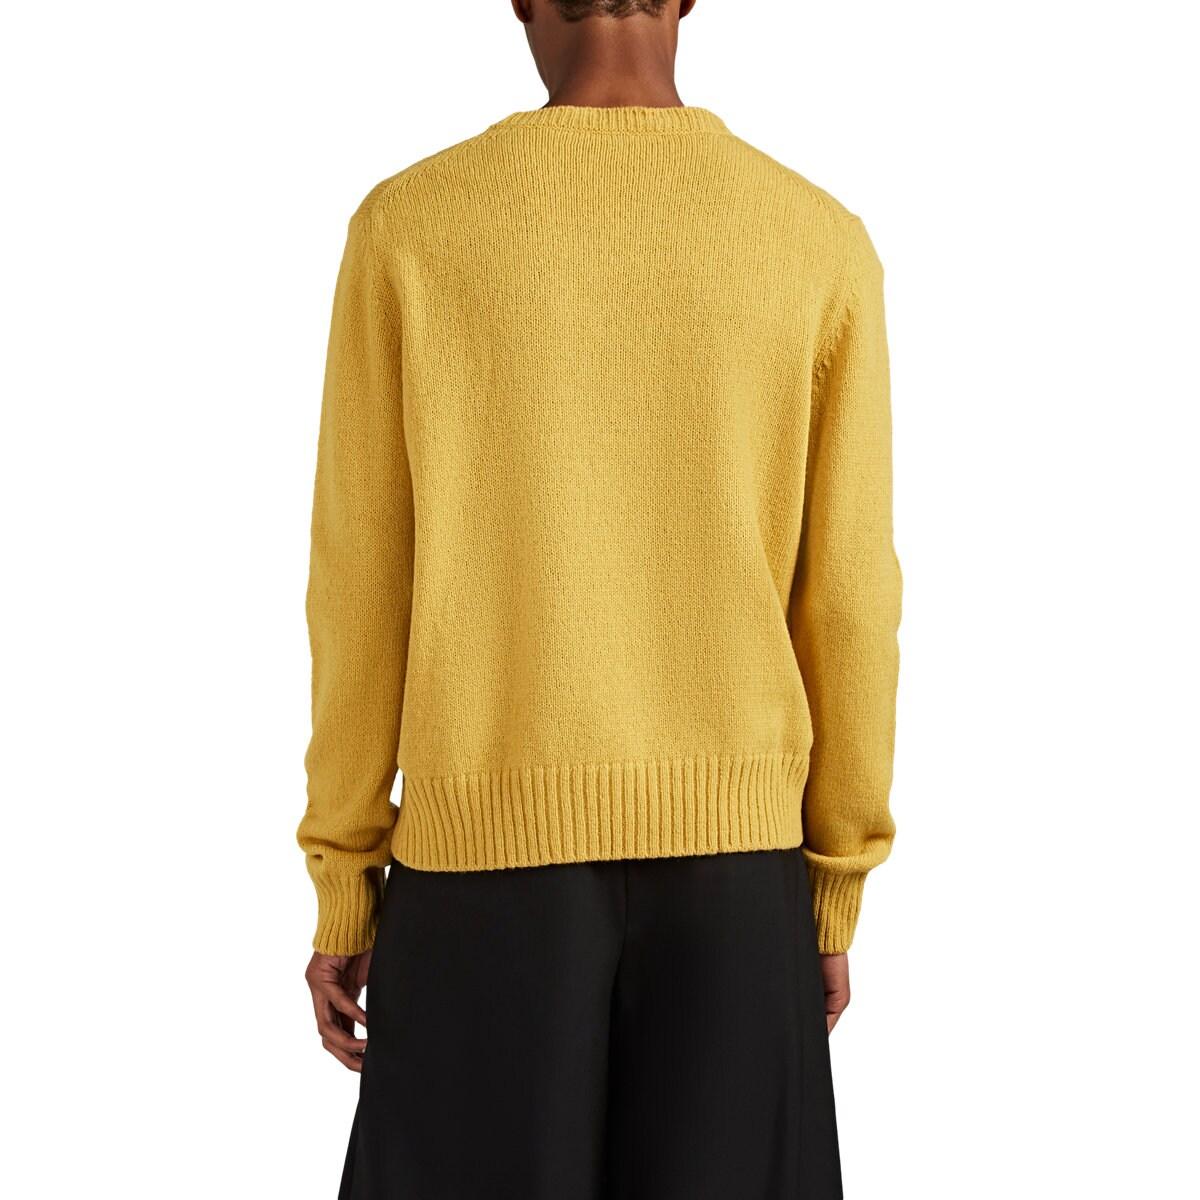 Prada Virgin Wool Crewneck Sweater in Yellow for Men - Lyst